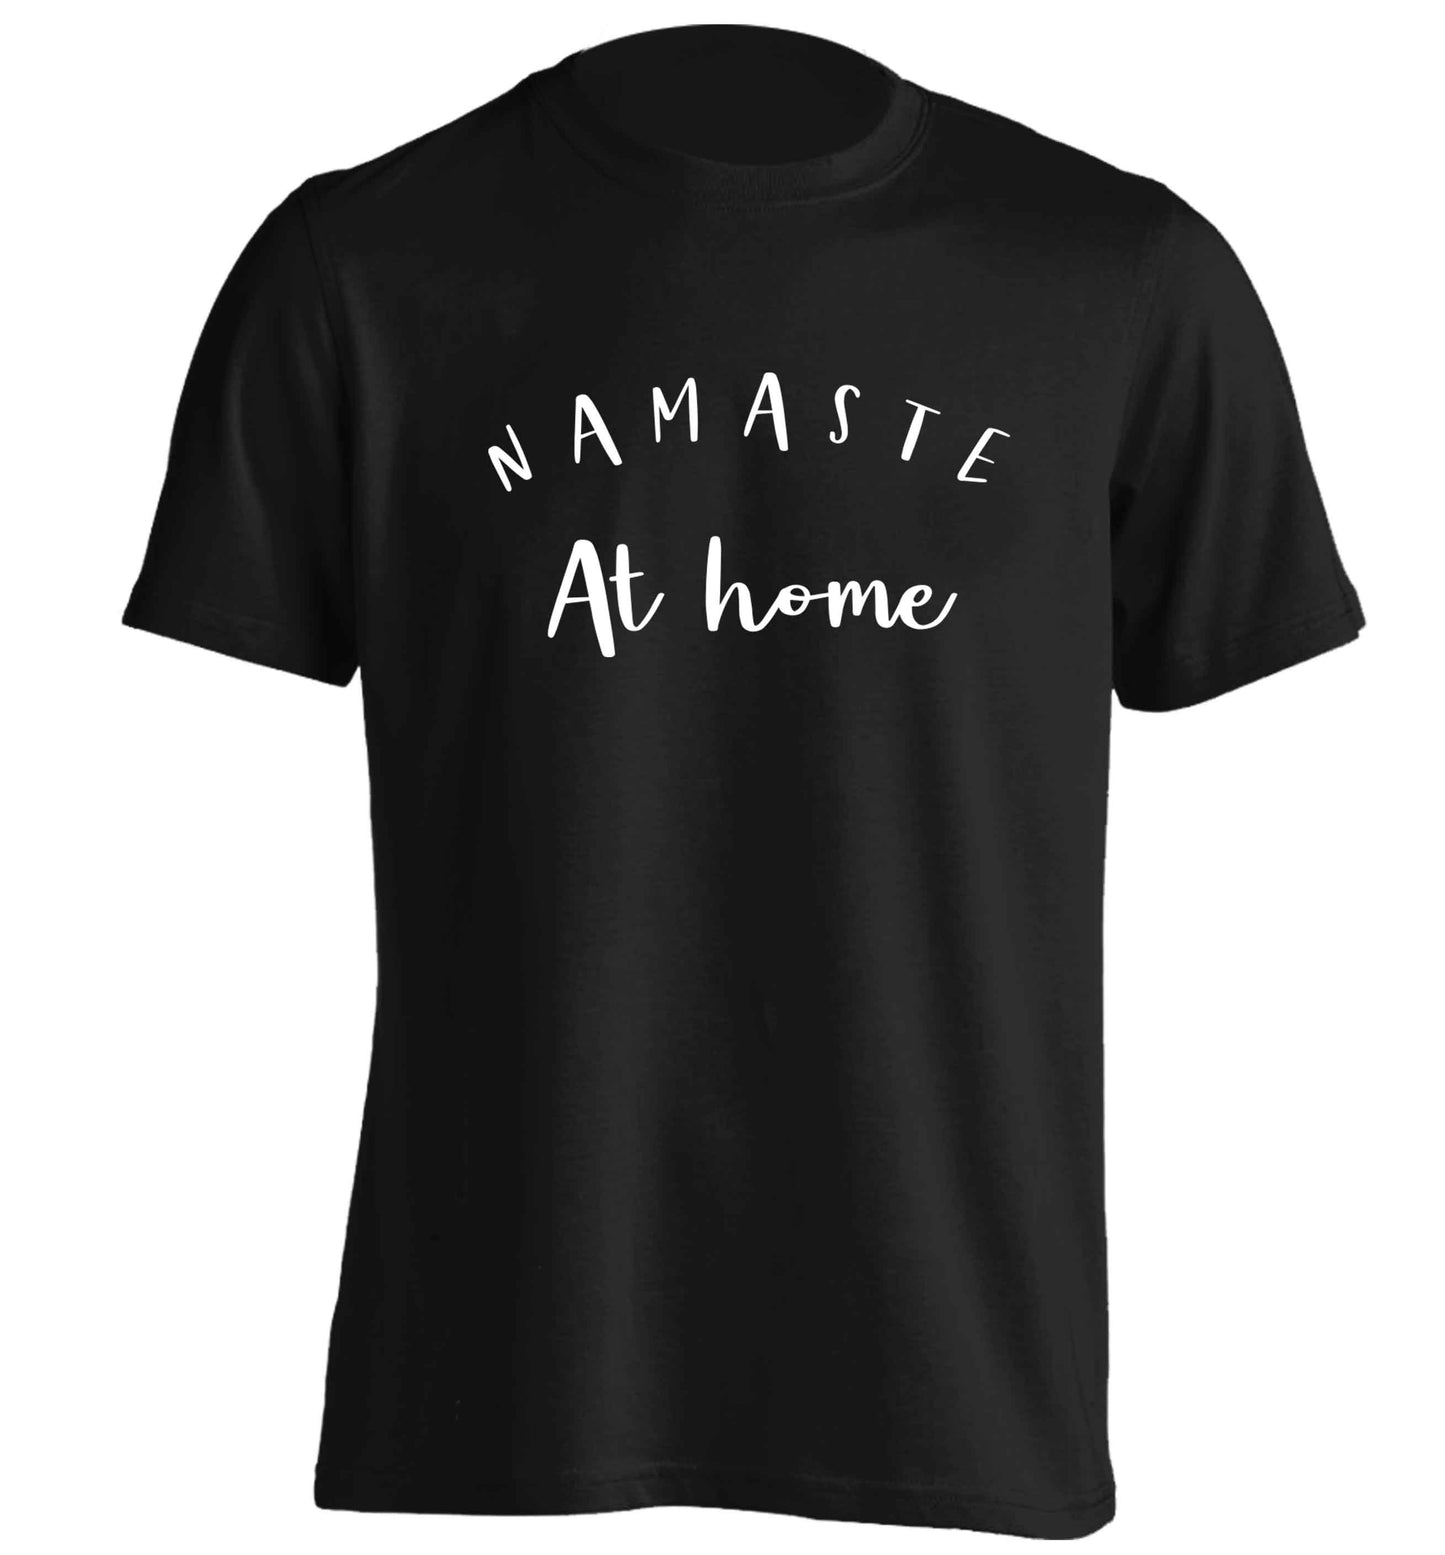 Namaste at home adults unisex black Tshirt 2XL